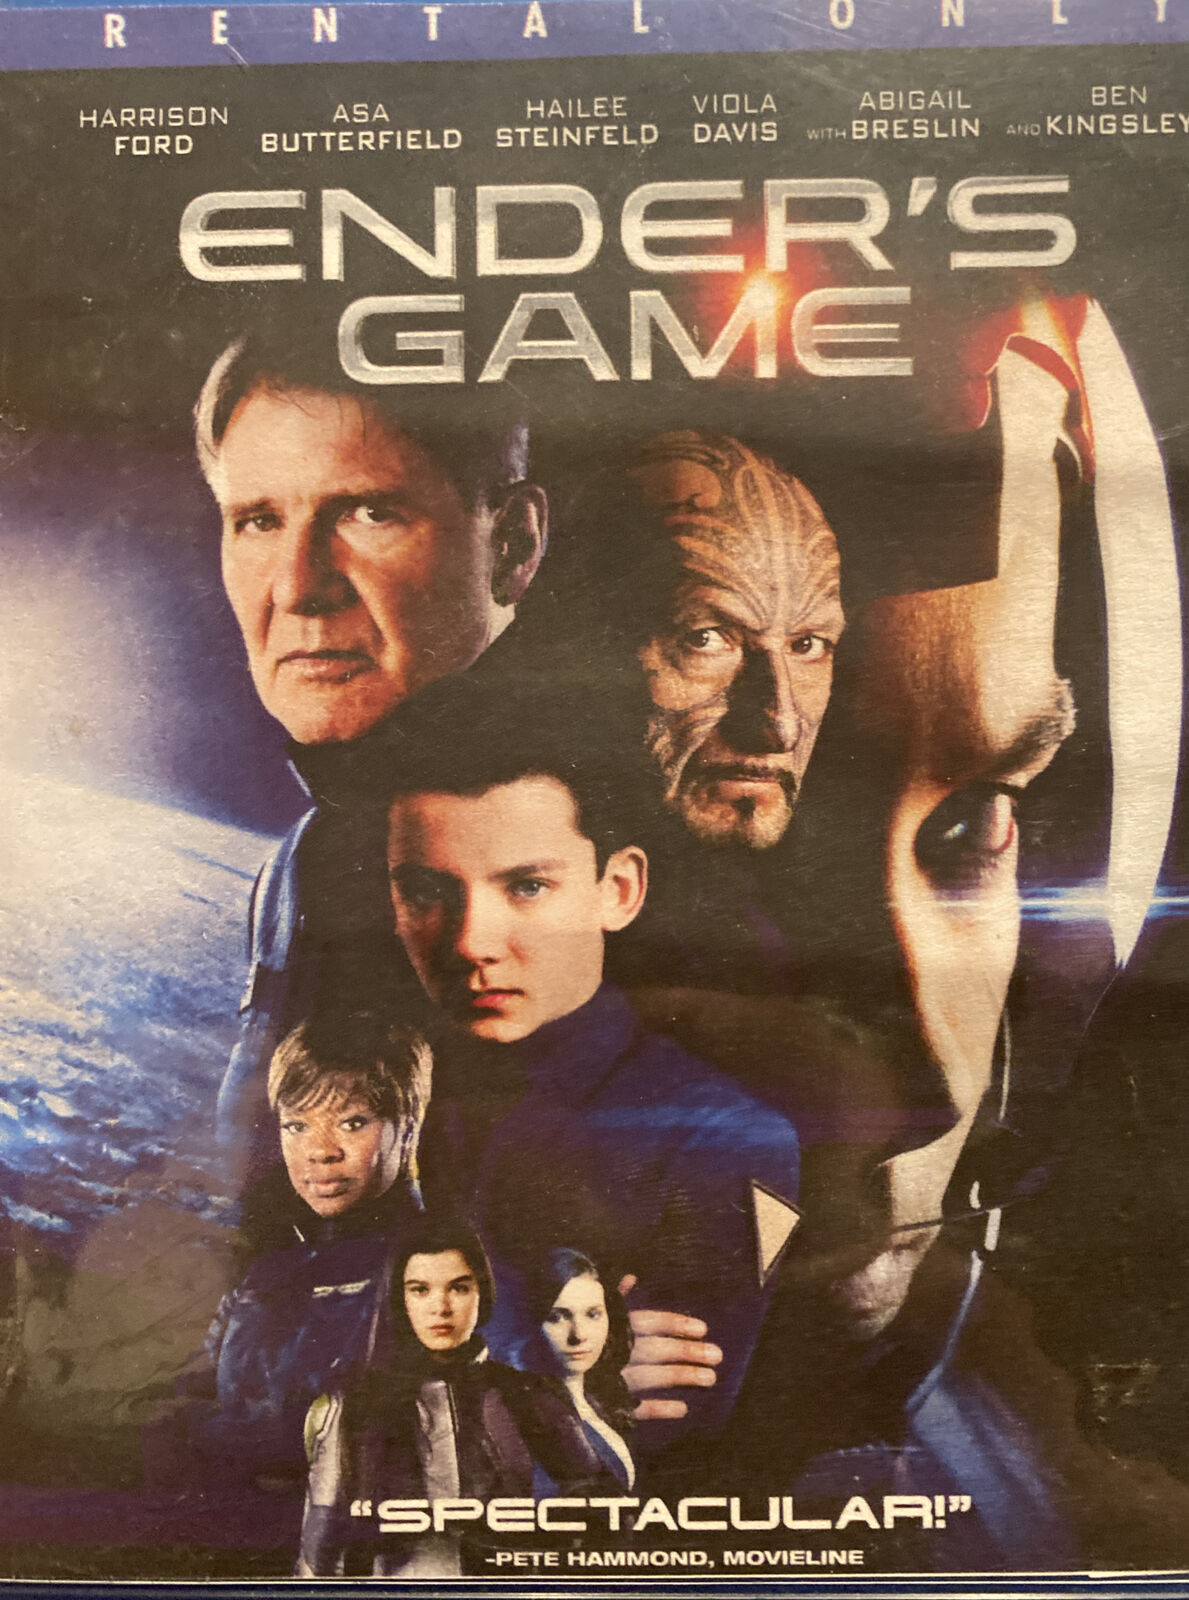 Ender's Game - Blu-ray SciFi 2013 PG-13